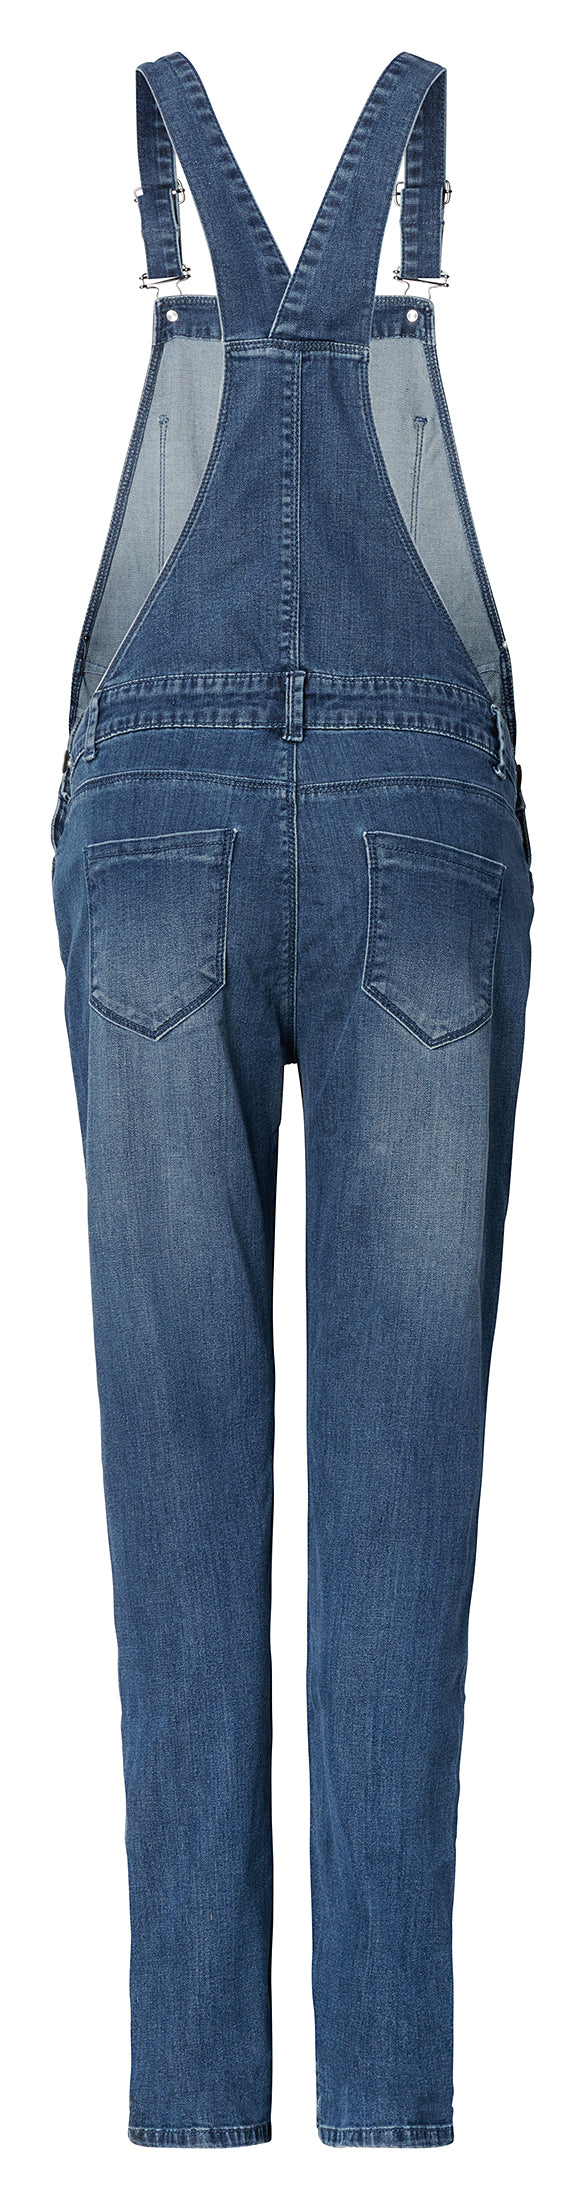 Flared jeans Salopette